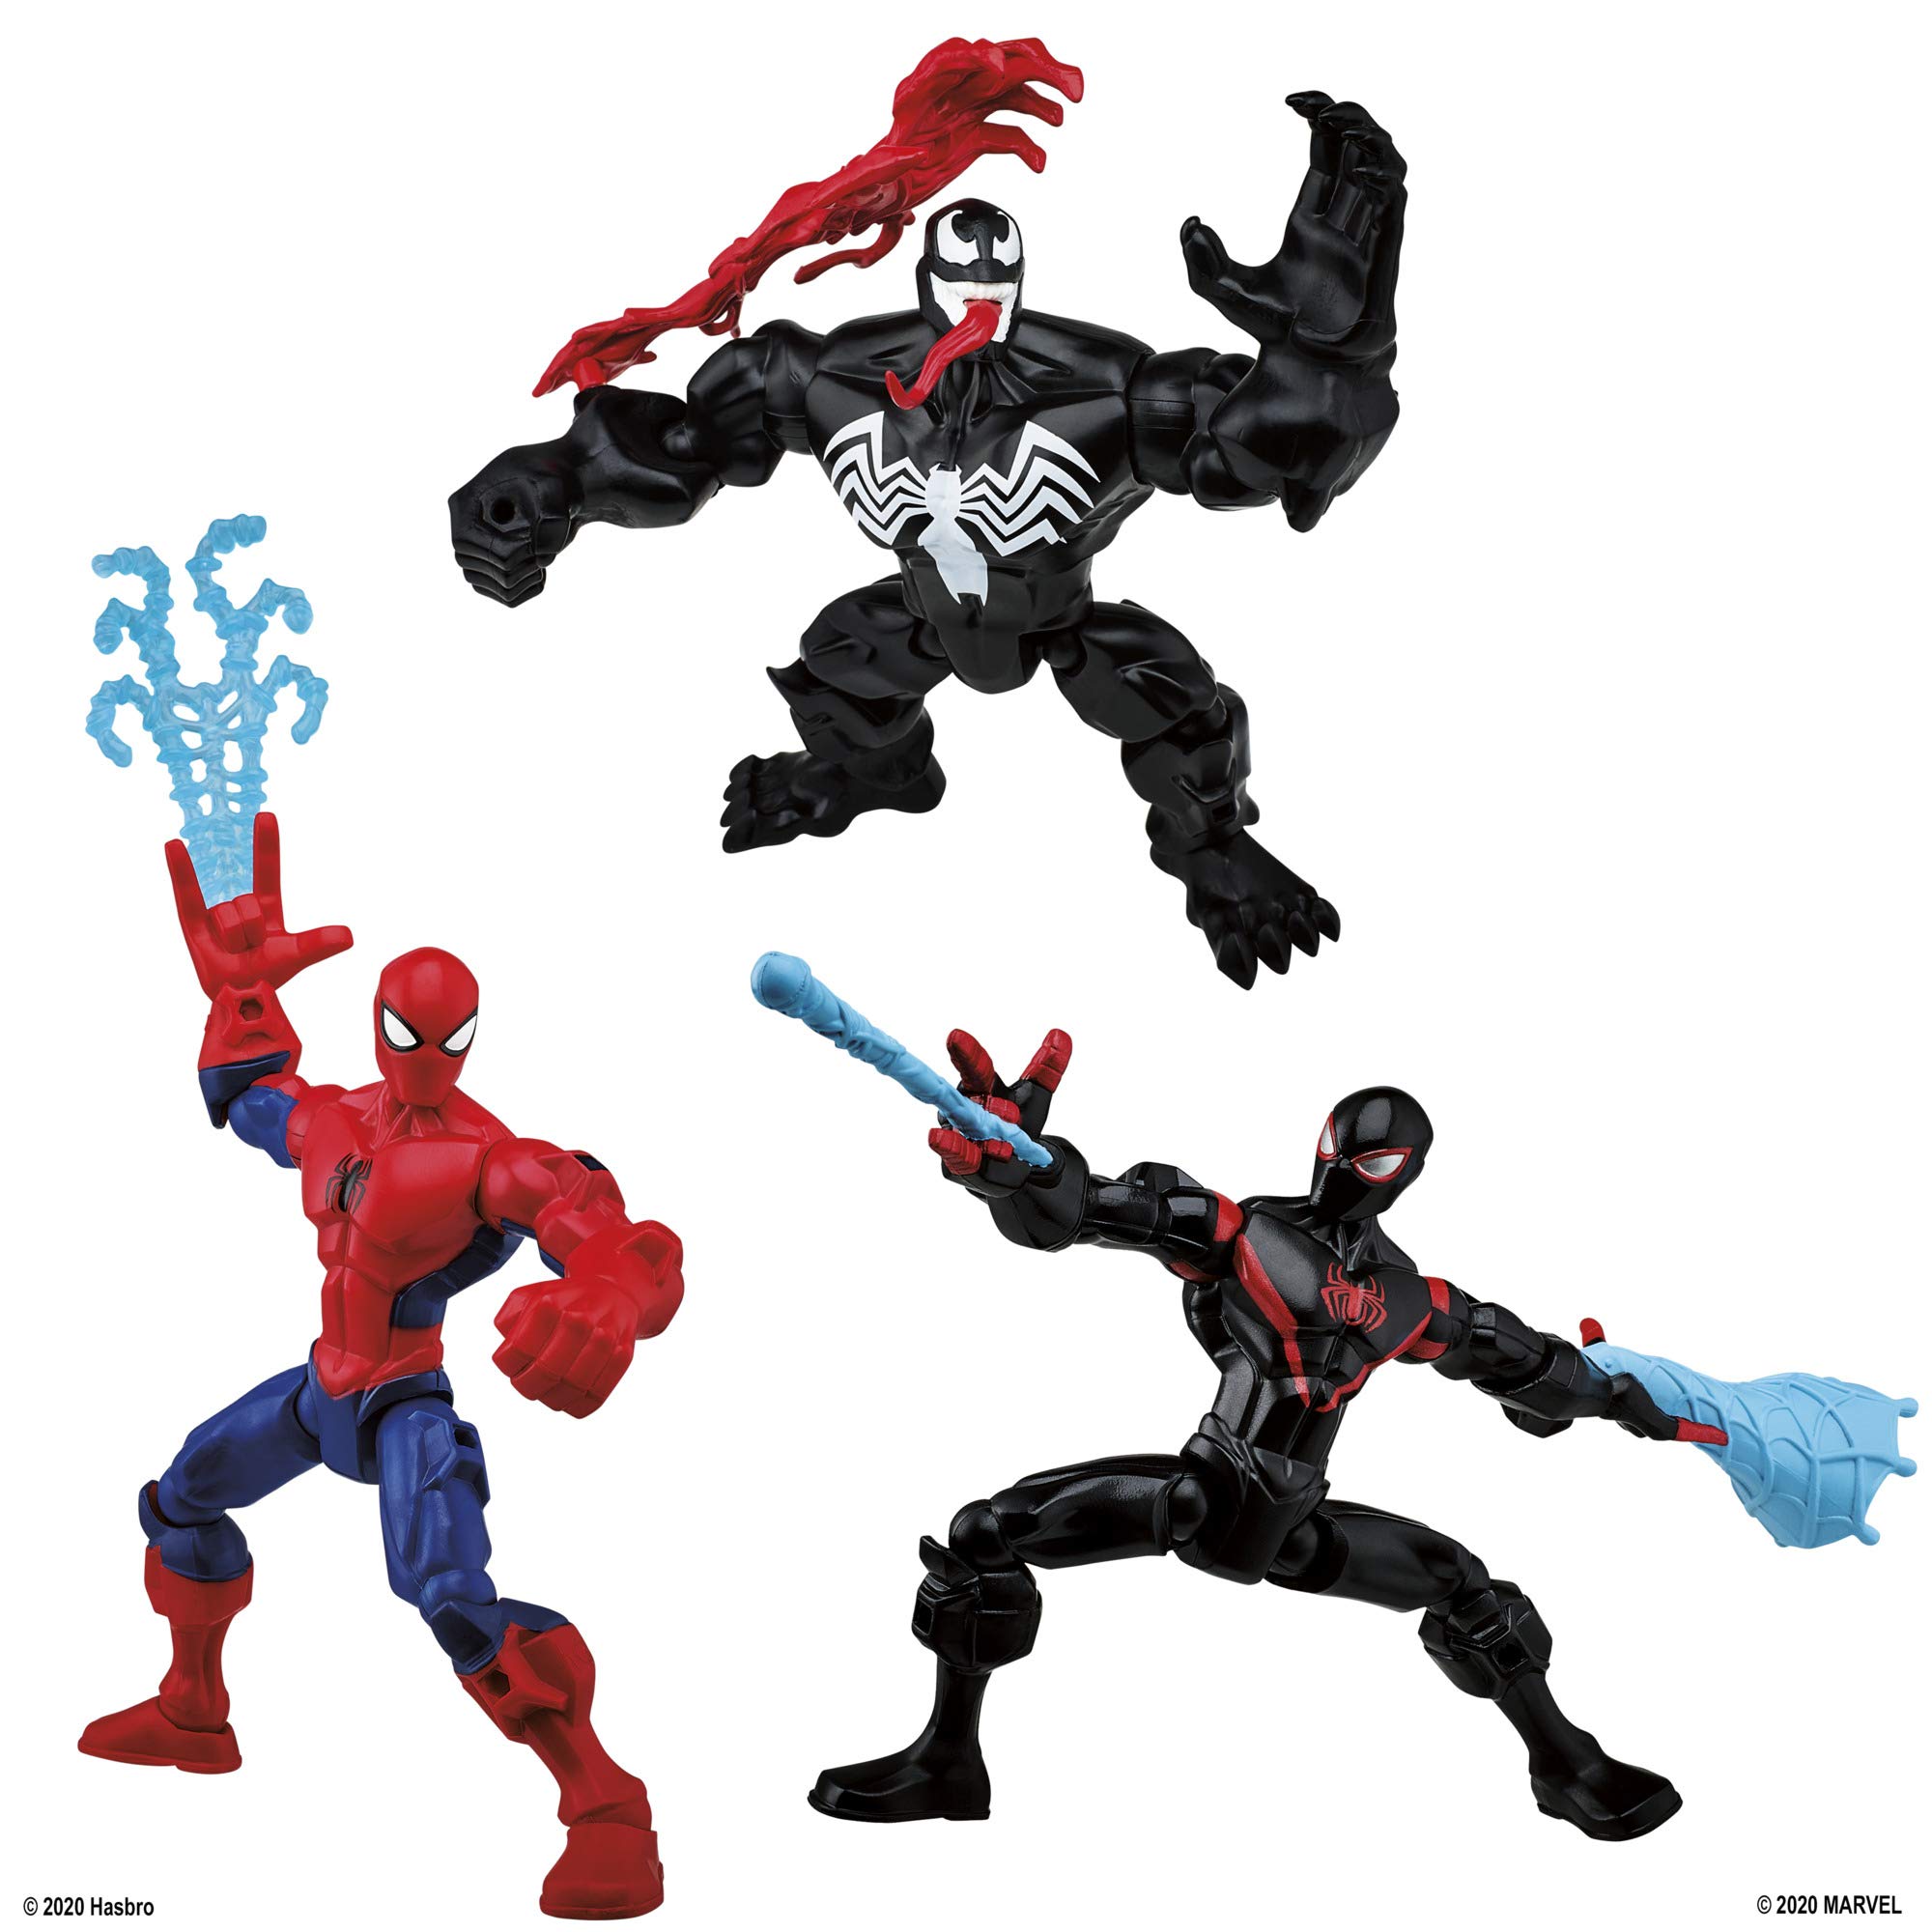 3-Pack 6'' Marvel Super Hero Mashers Web-Slinging Toy Mash Collection Pack (Miles Morales Spider-Man, Peter Parker, Venom) $18 + Free Shipping w/ Prime or on $25+